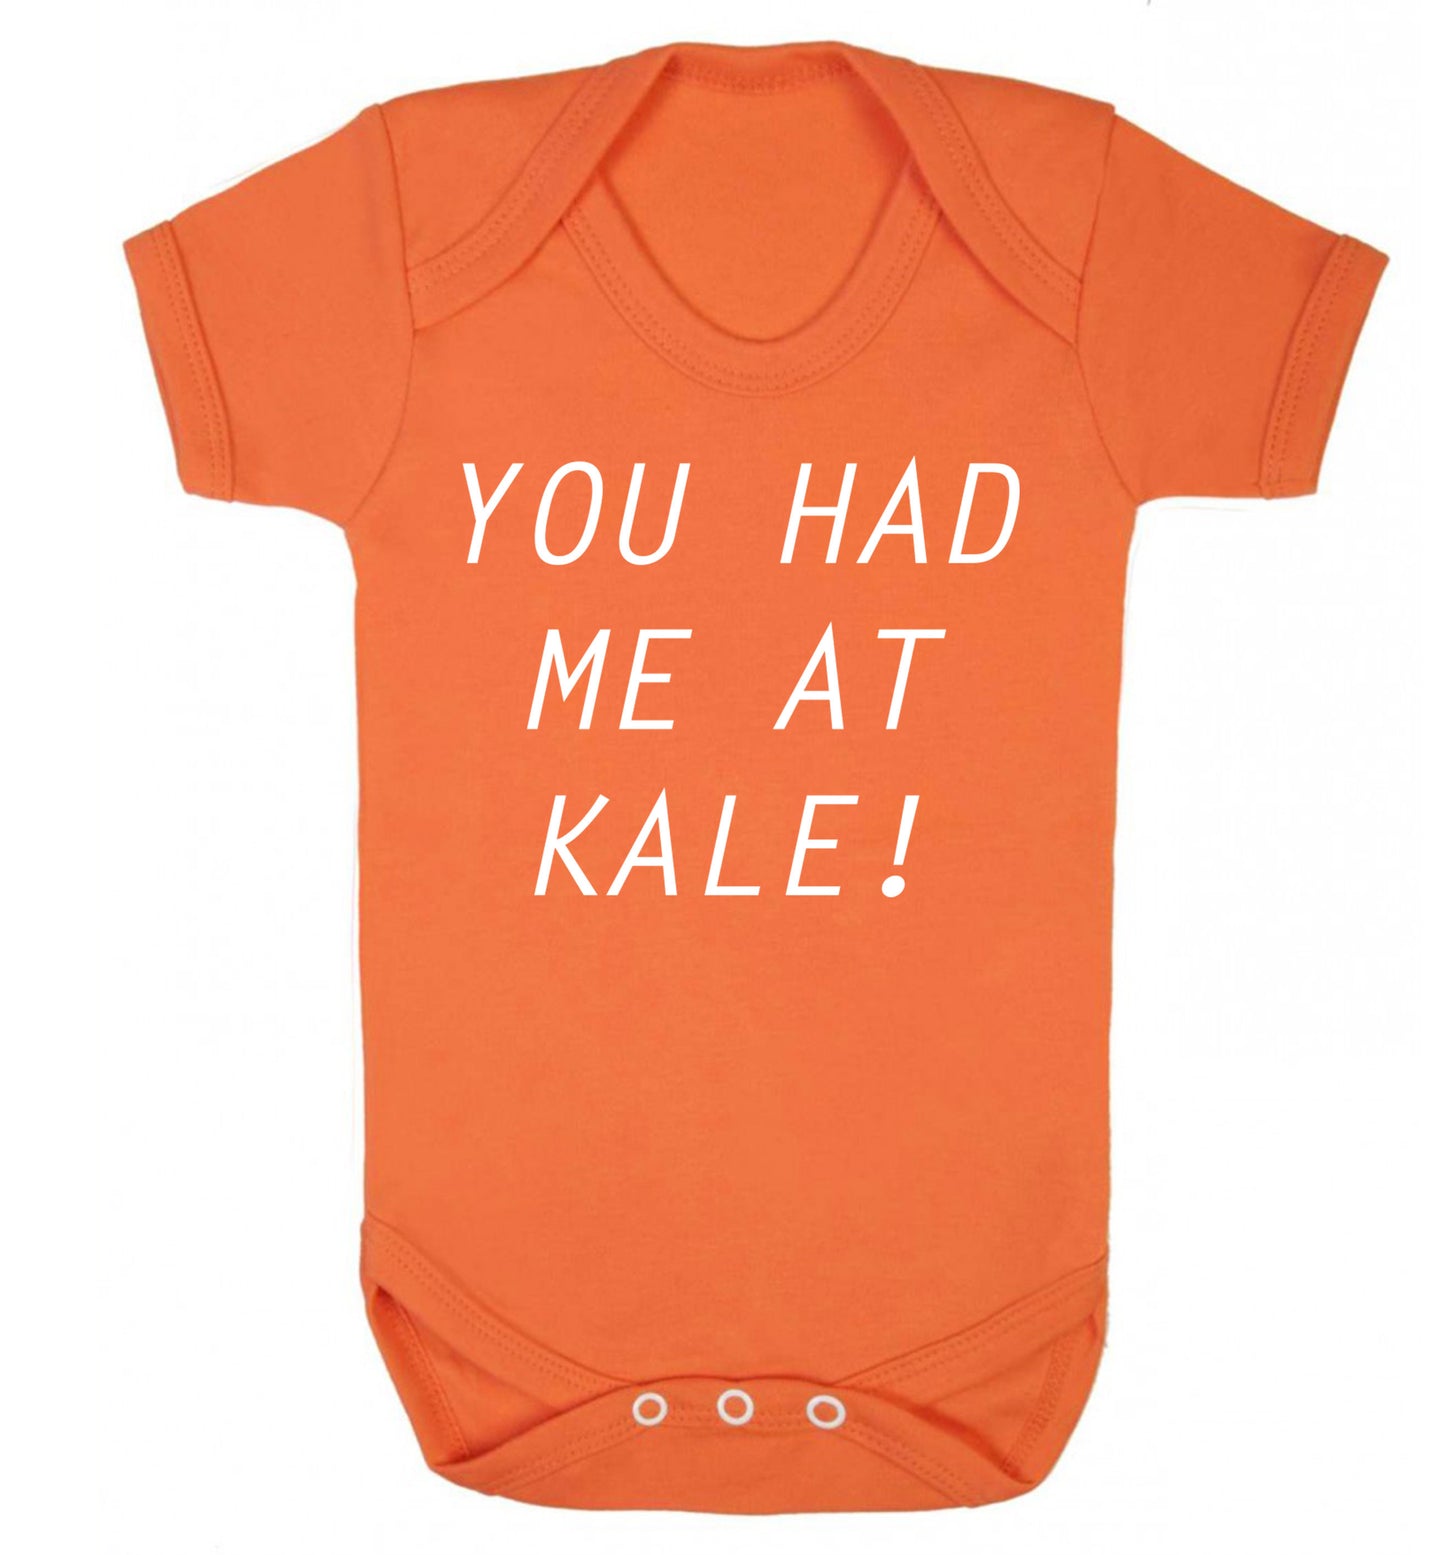 You had me at kale Baby Vest orange 18-24 months